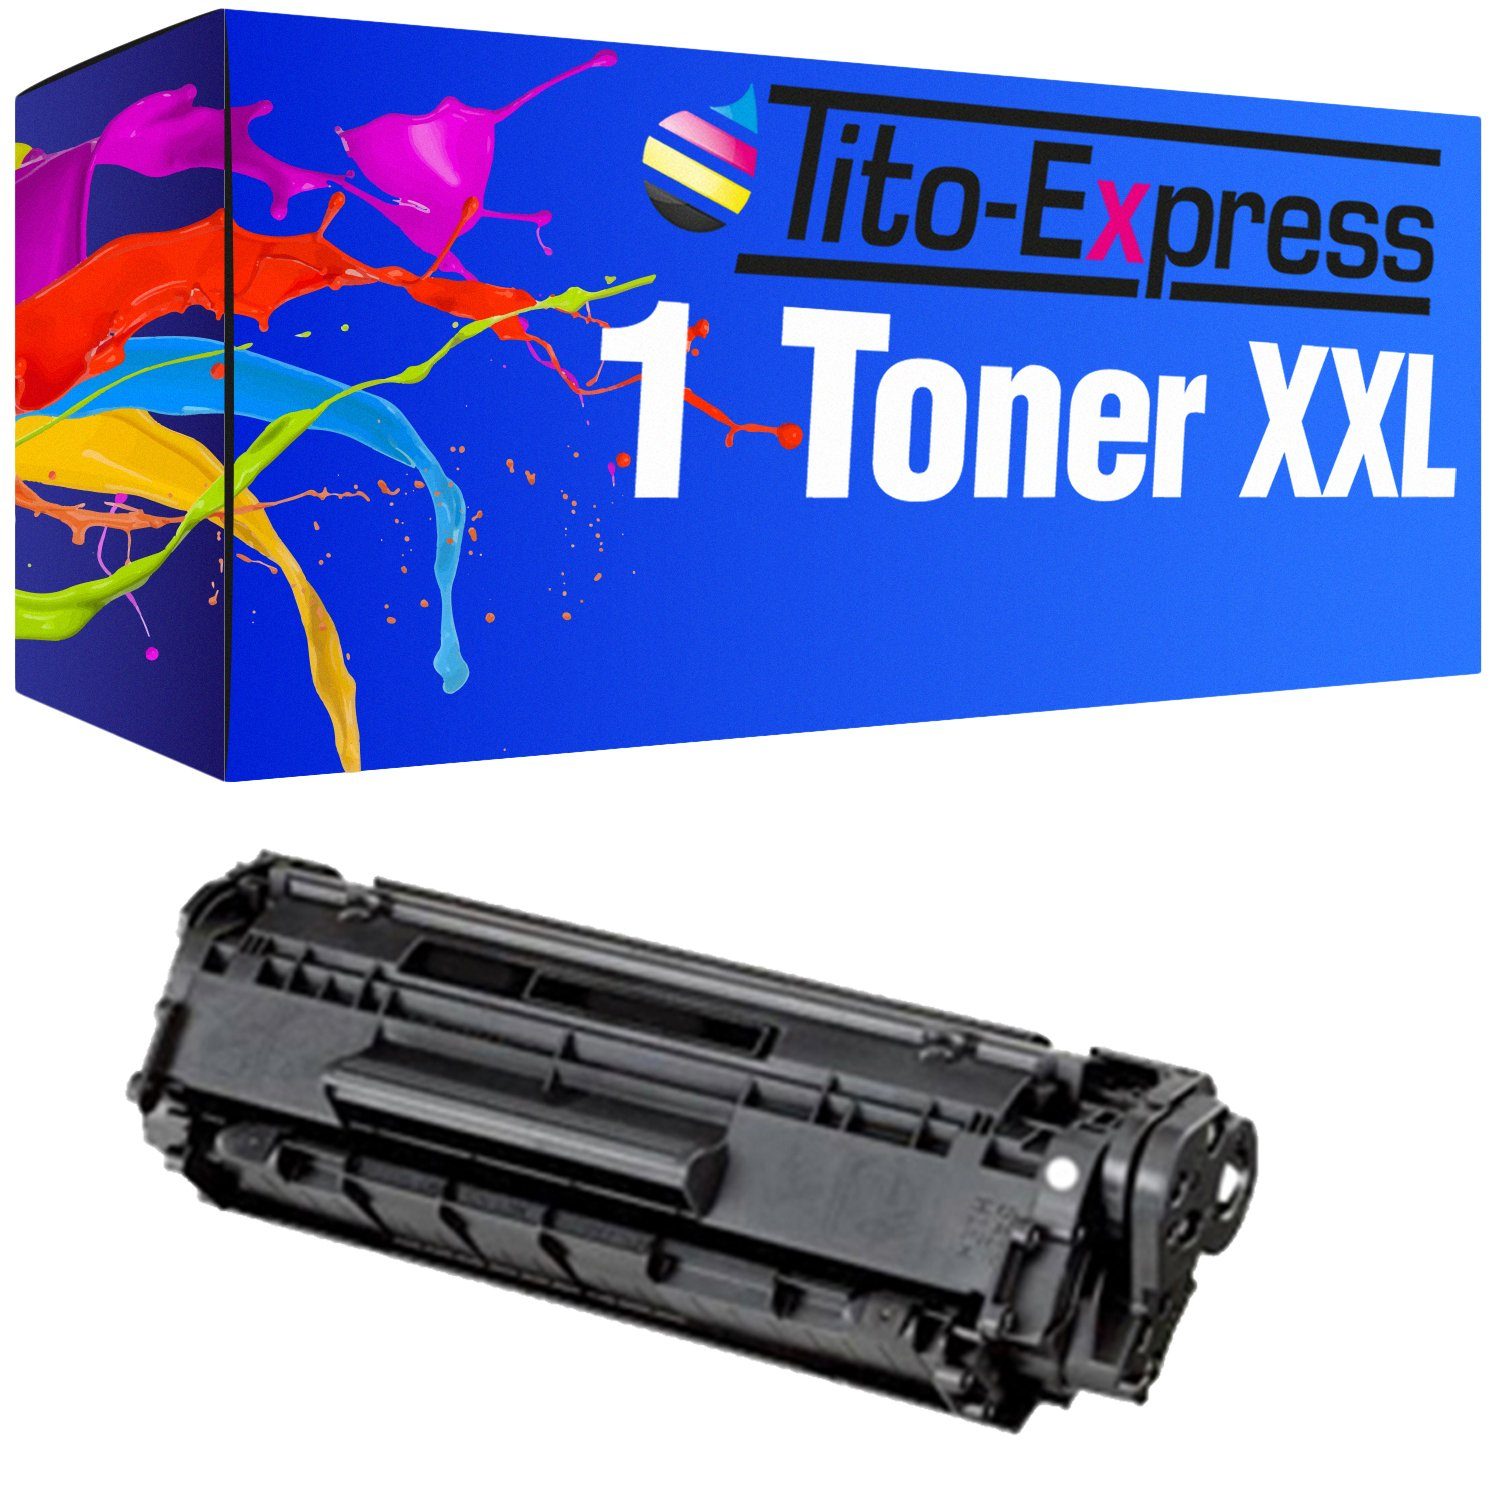 FX-10 für MF4320D CanonFX10, Canon MF4120 (1x MF4350D I-Sensys MF4150 MF4340D ersetzt PC-D440 Tito-Express FX 10 Canon Tonerpatrone Black), MF4010